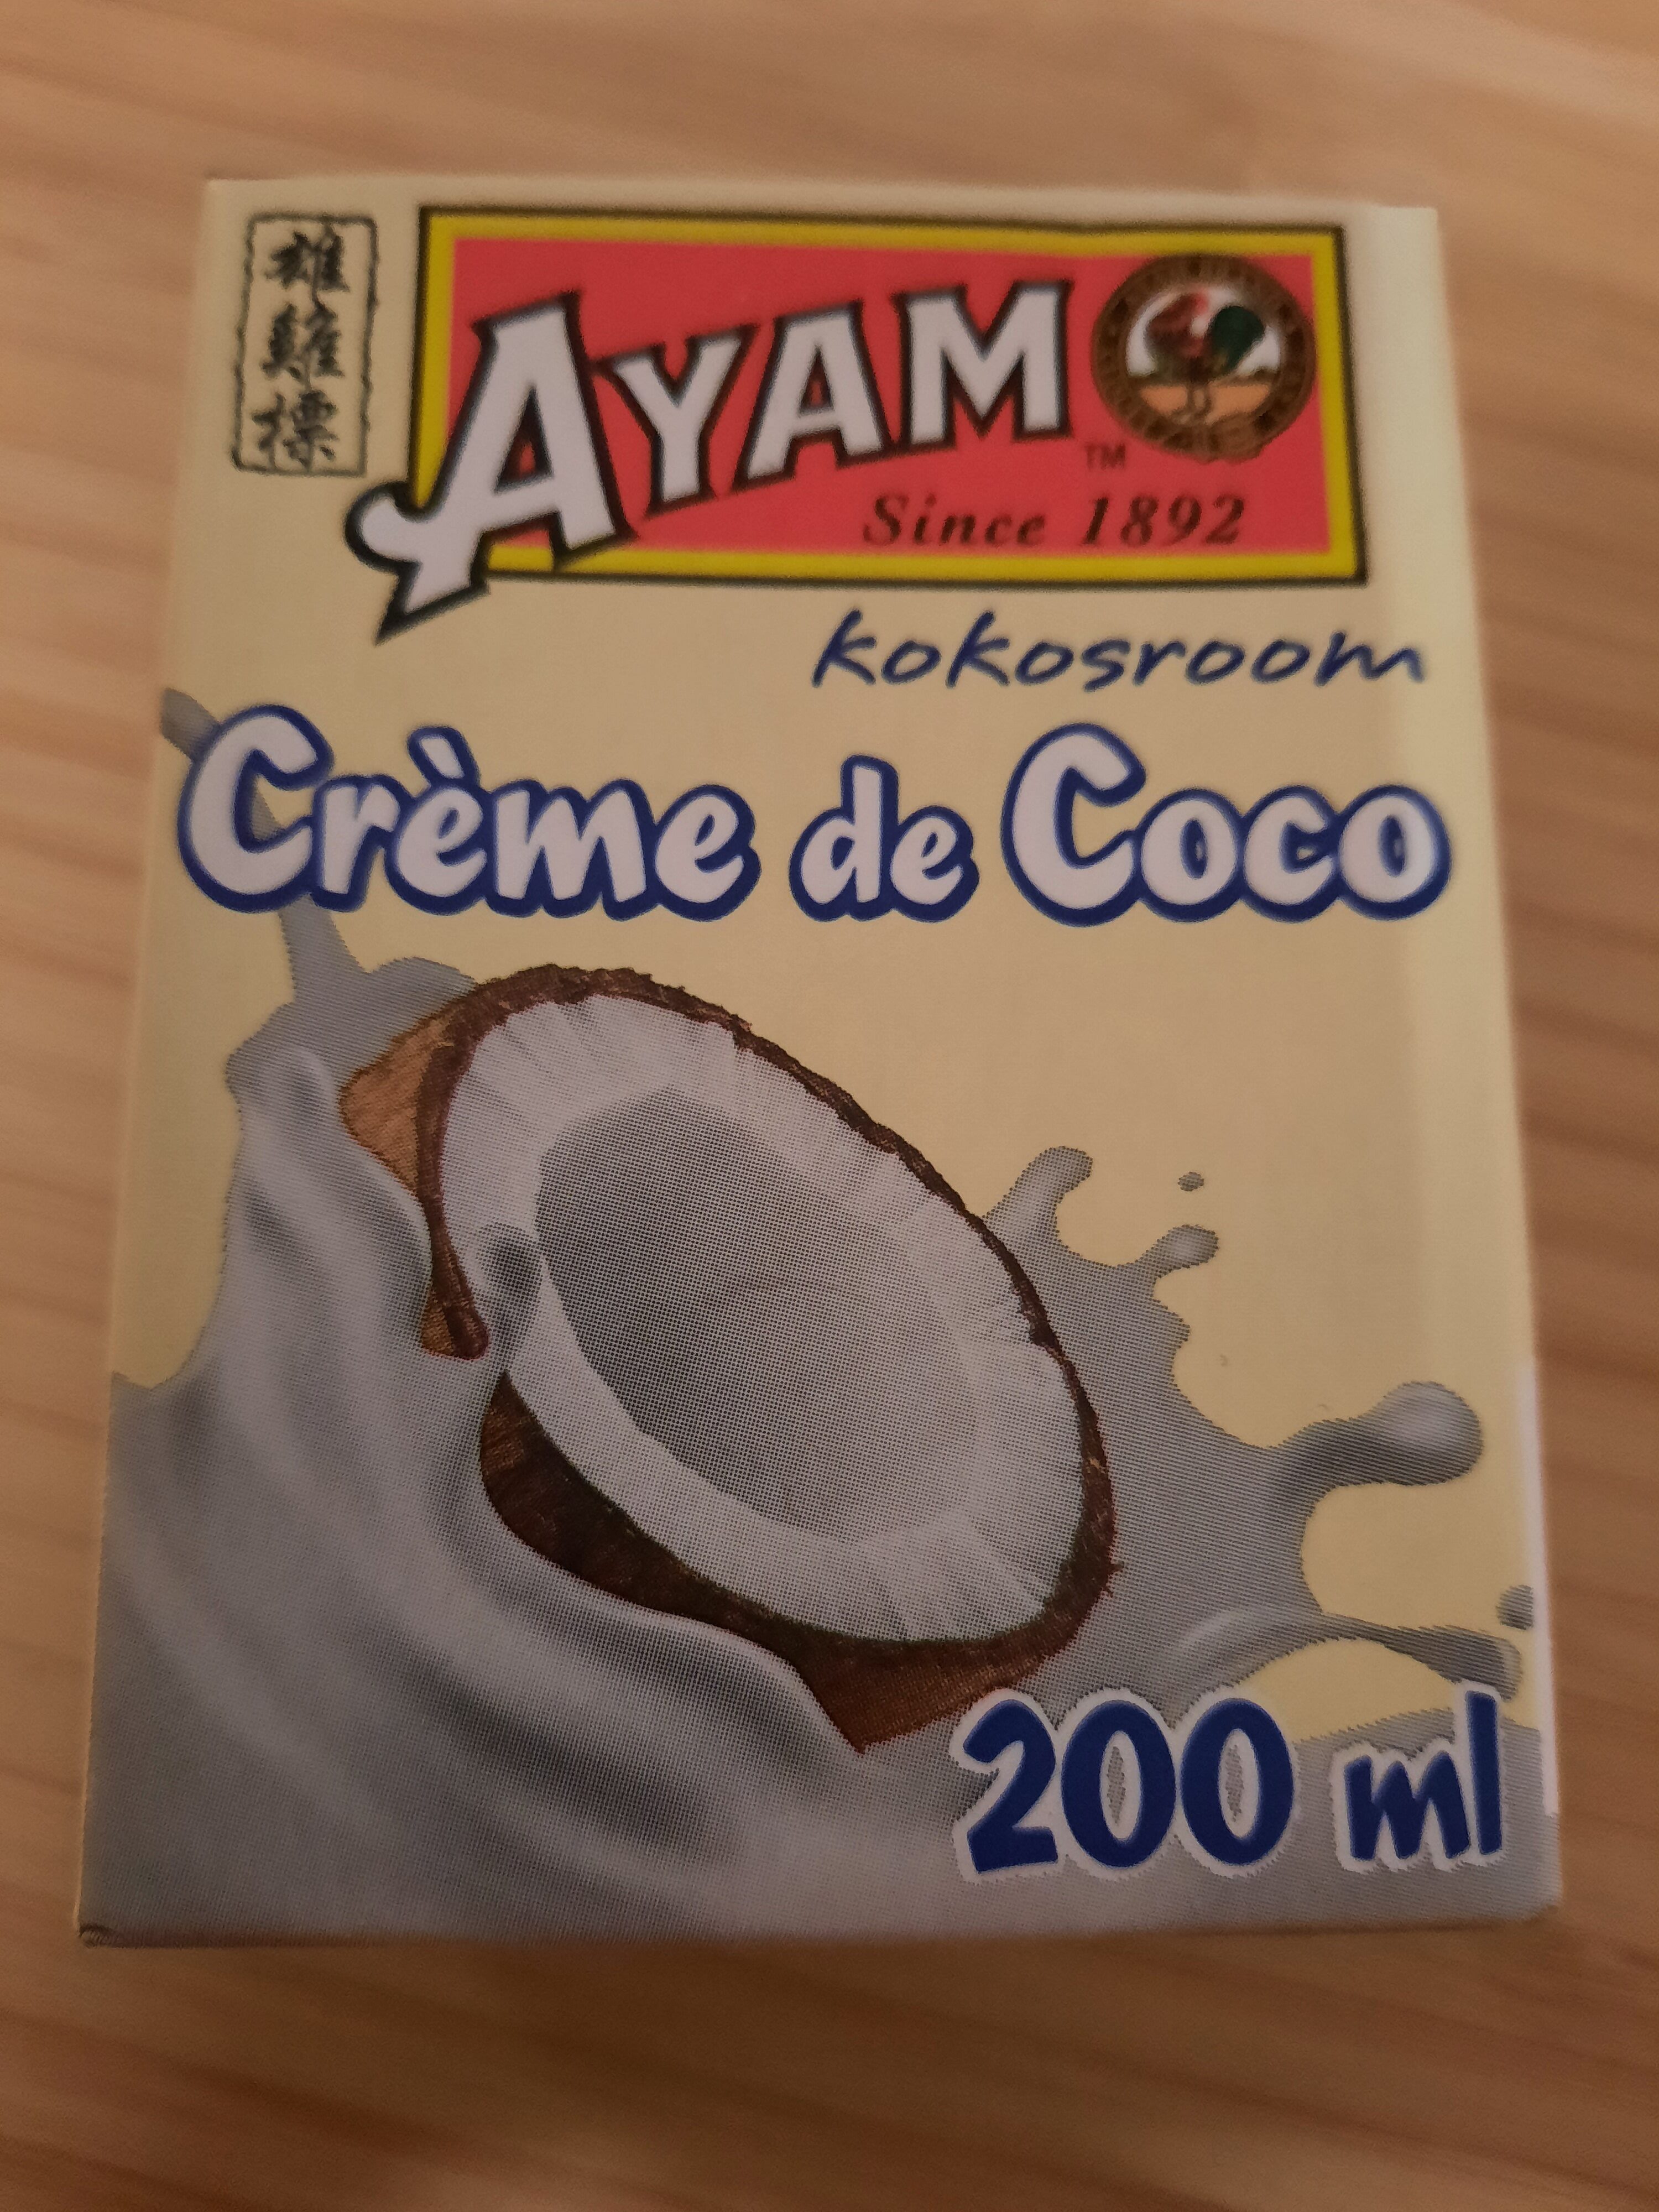 Crème de coco Ayam™ - Product - fr